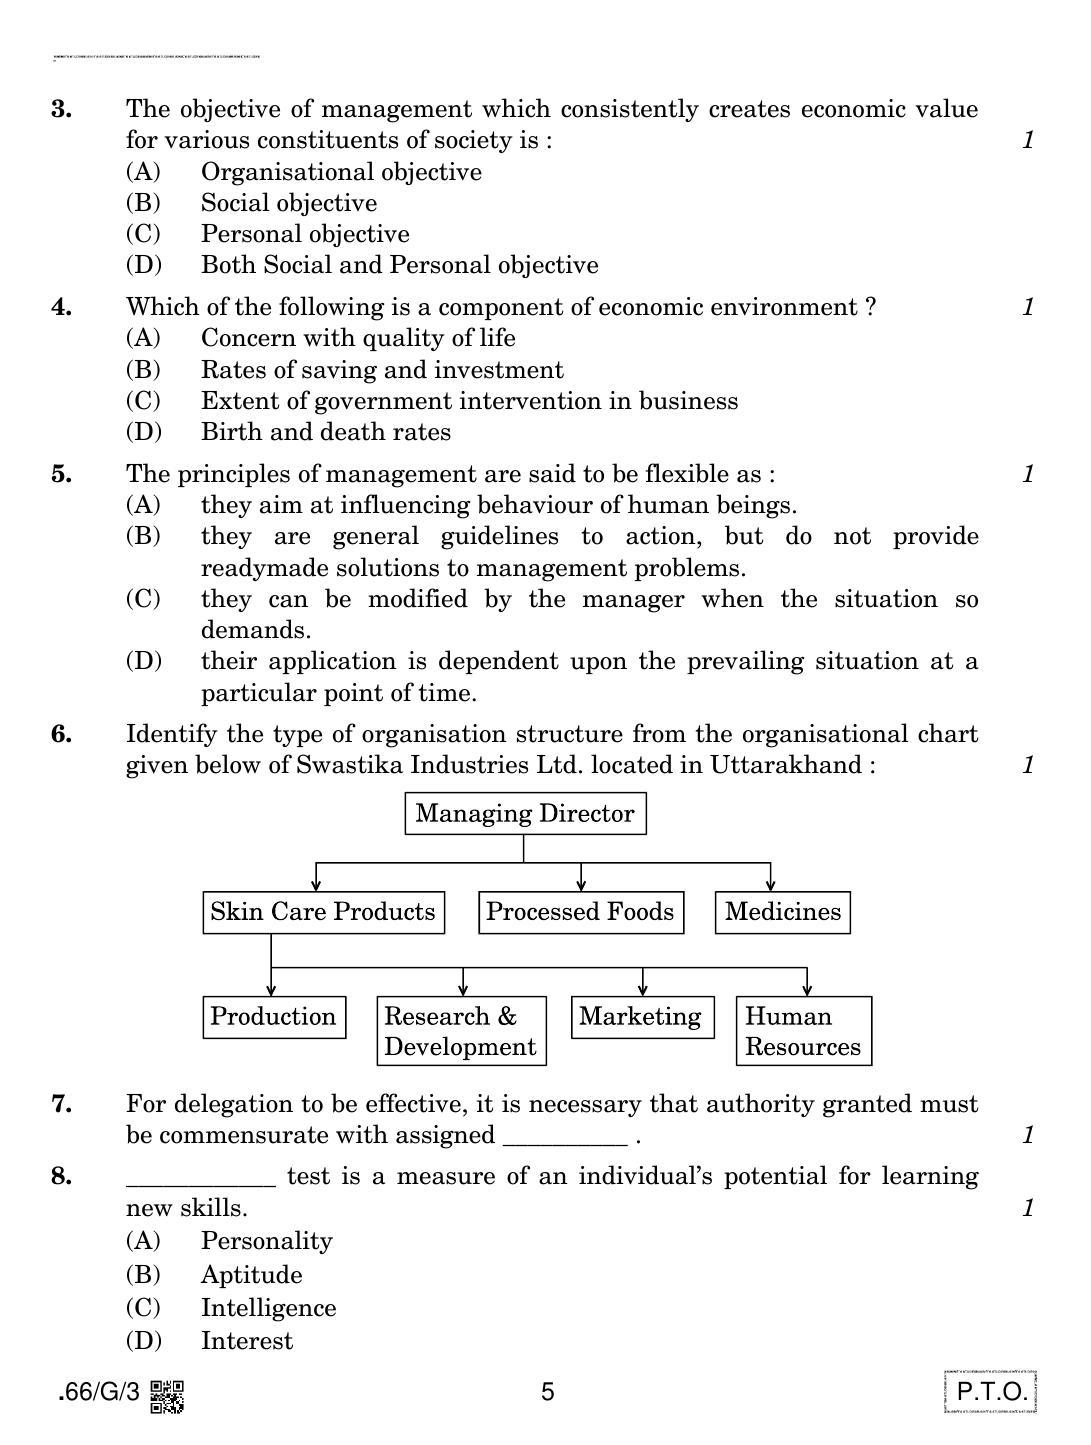 CBSE Class 12 66-C-3 - Business Studies 2020 Compartment Question Paper - Page 5